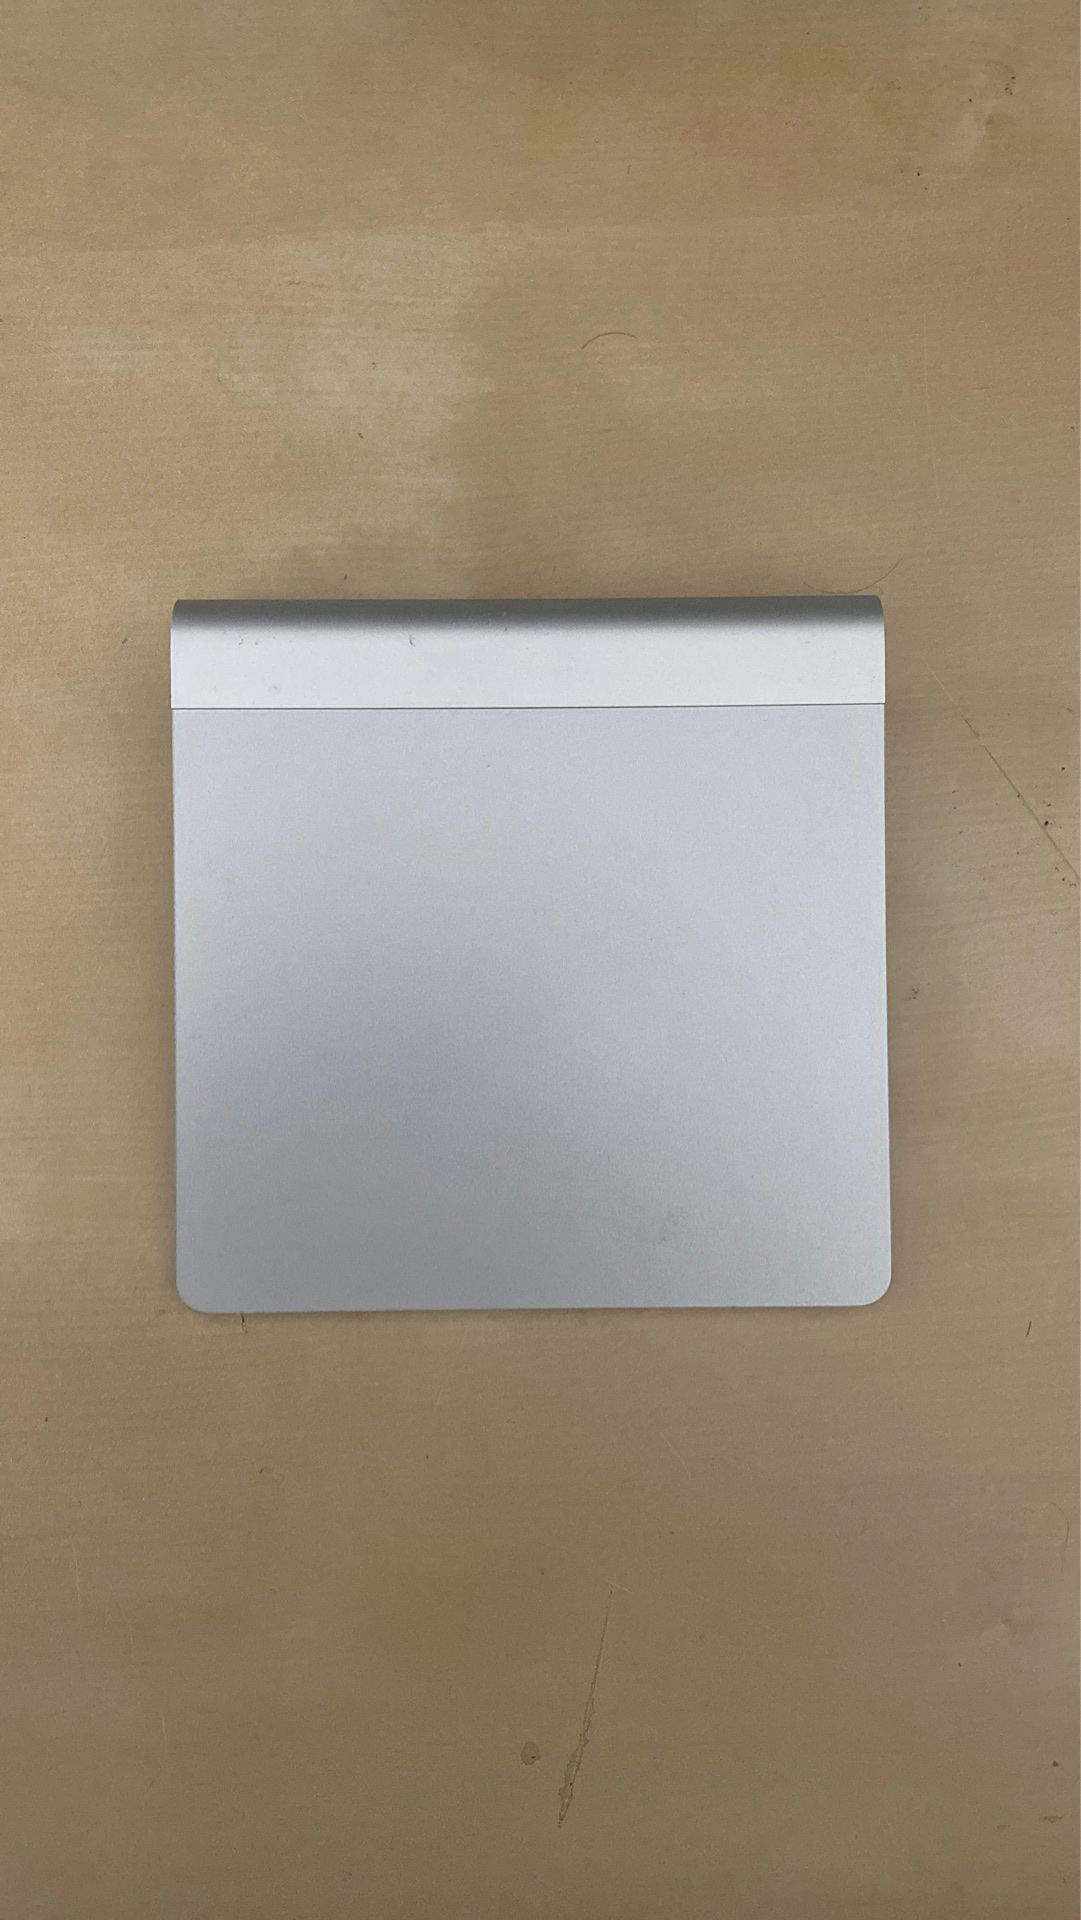 Apple Wireless Trackpad